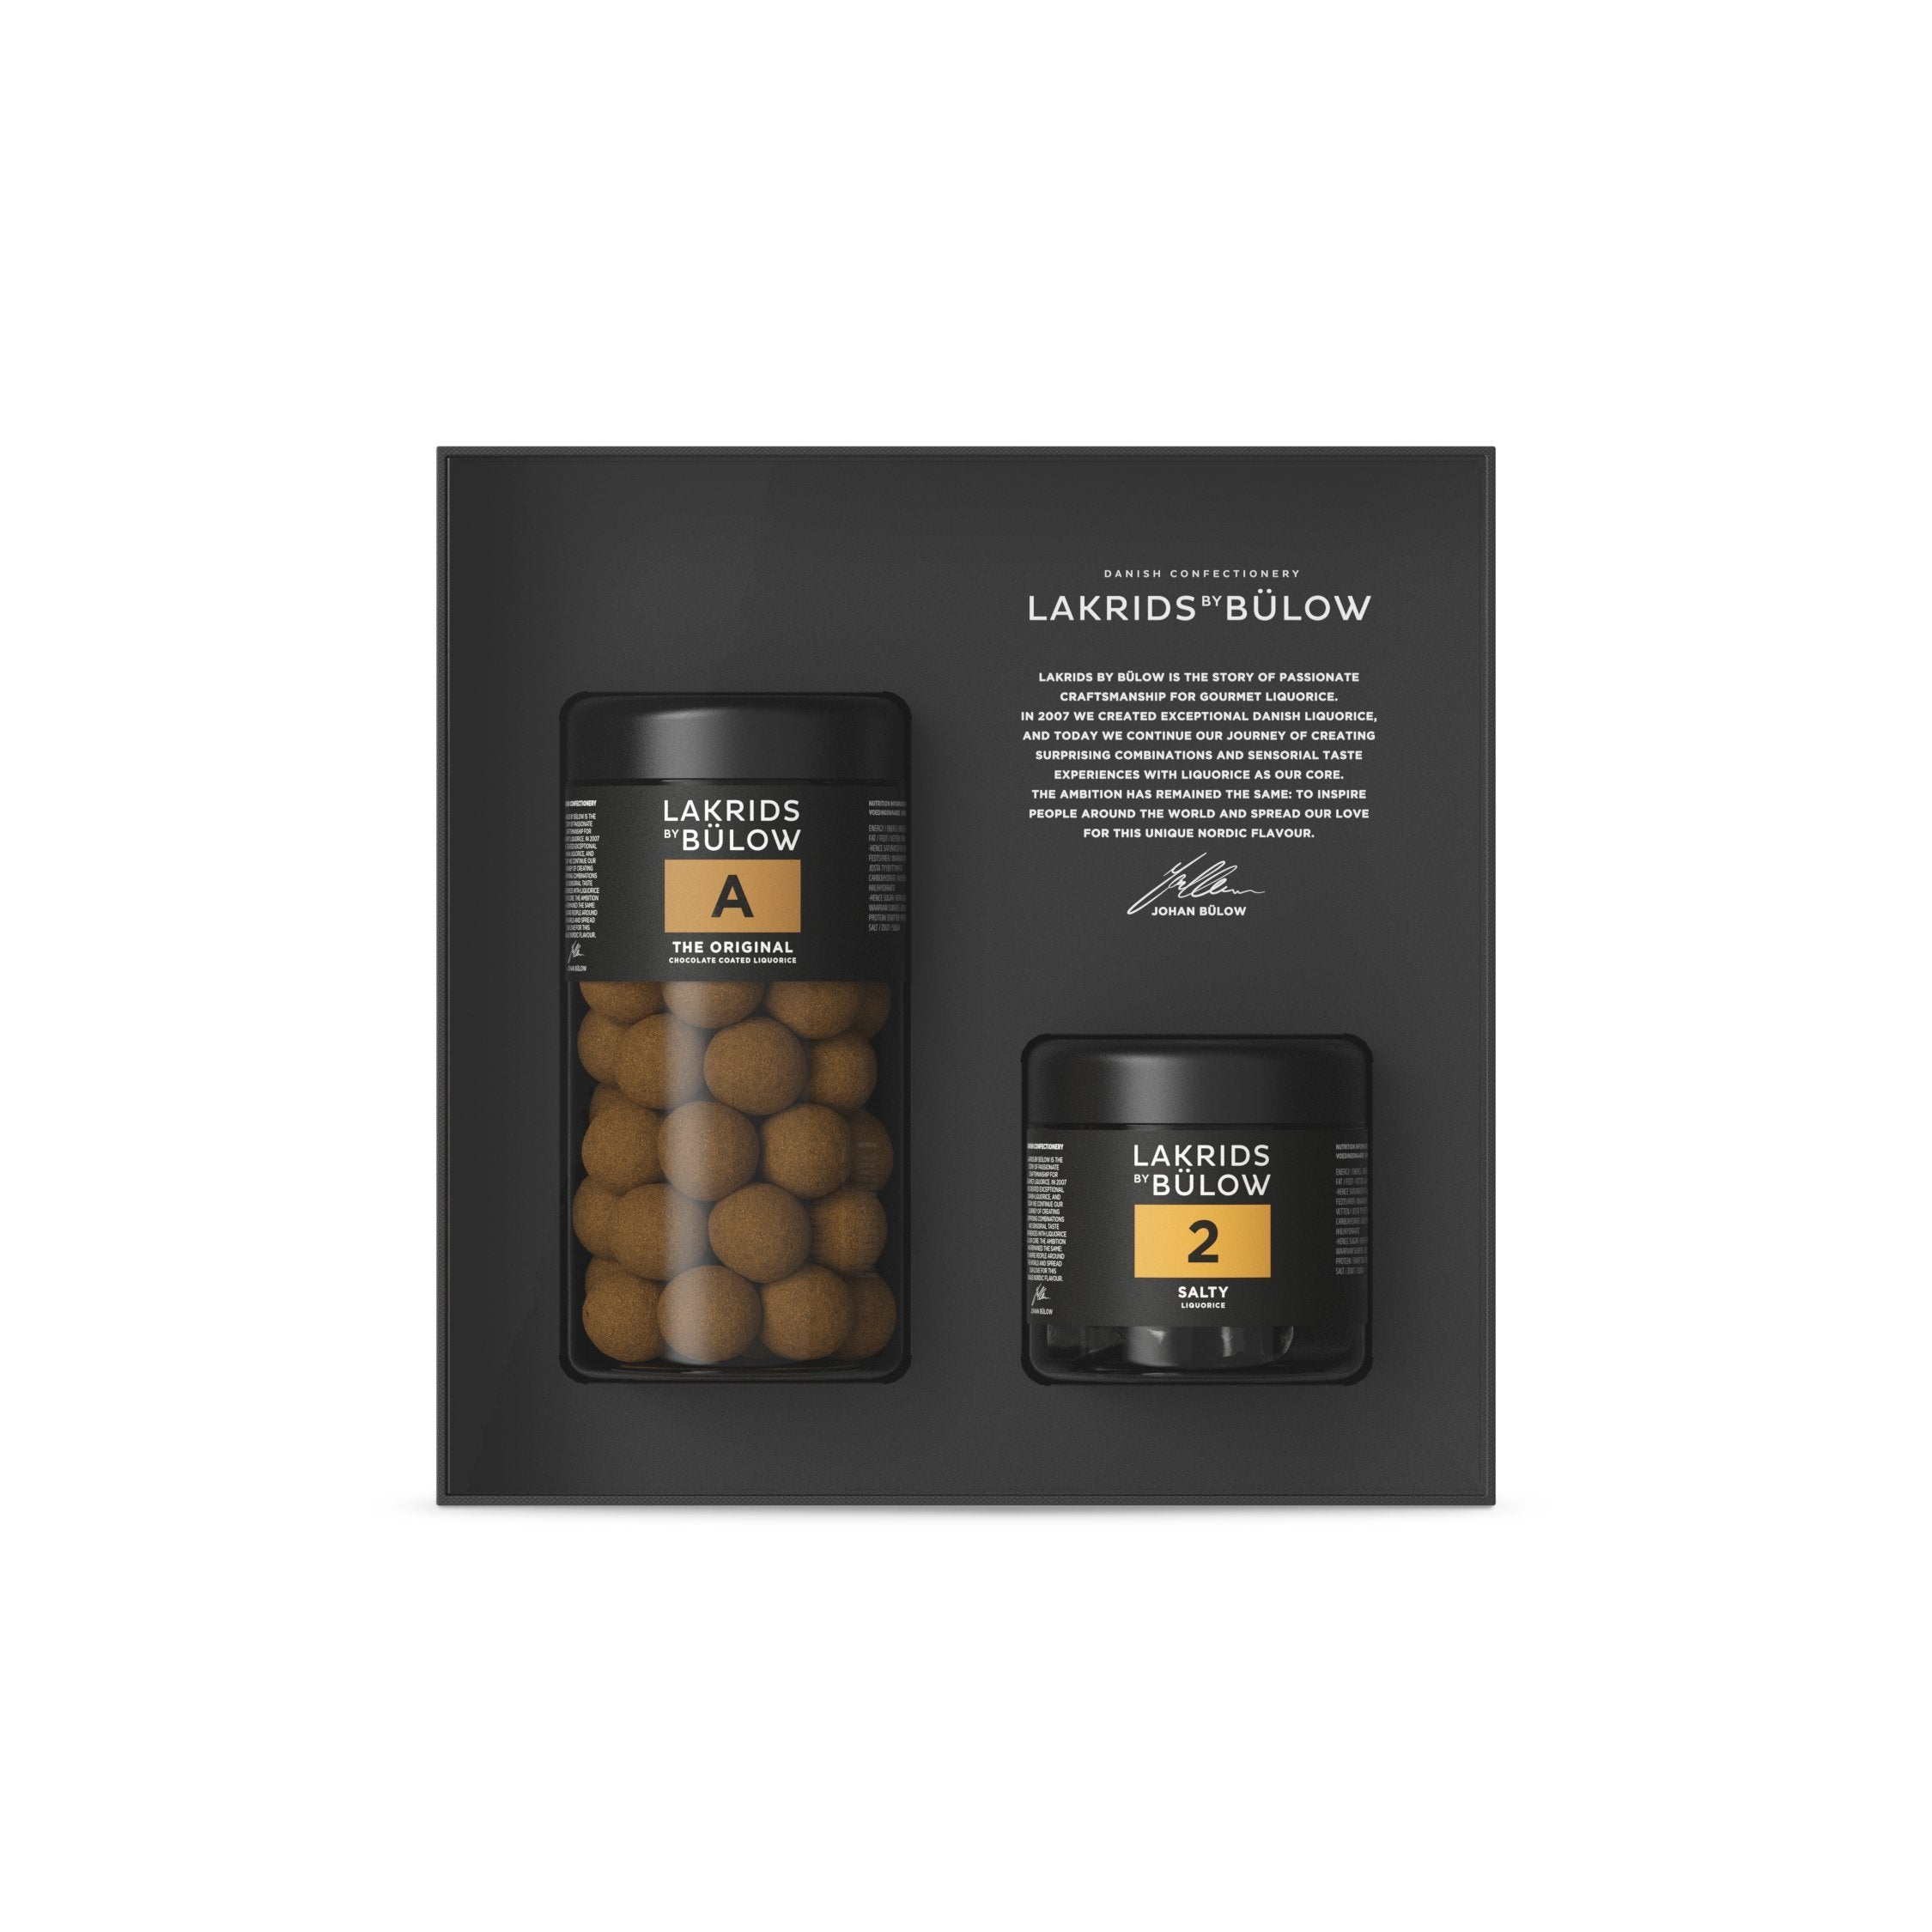 Lakrids By Bülow Black Box - A et 2, 415 grammes